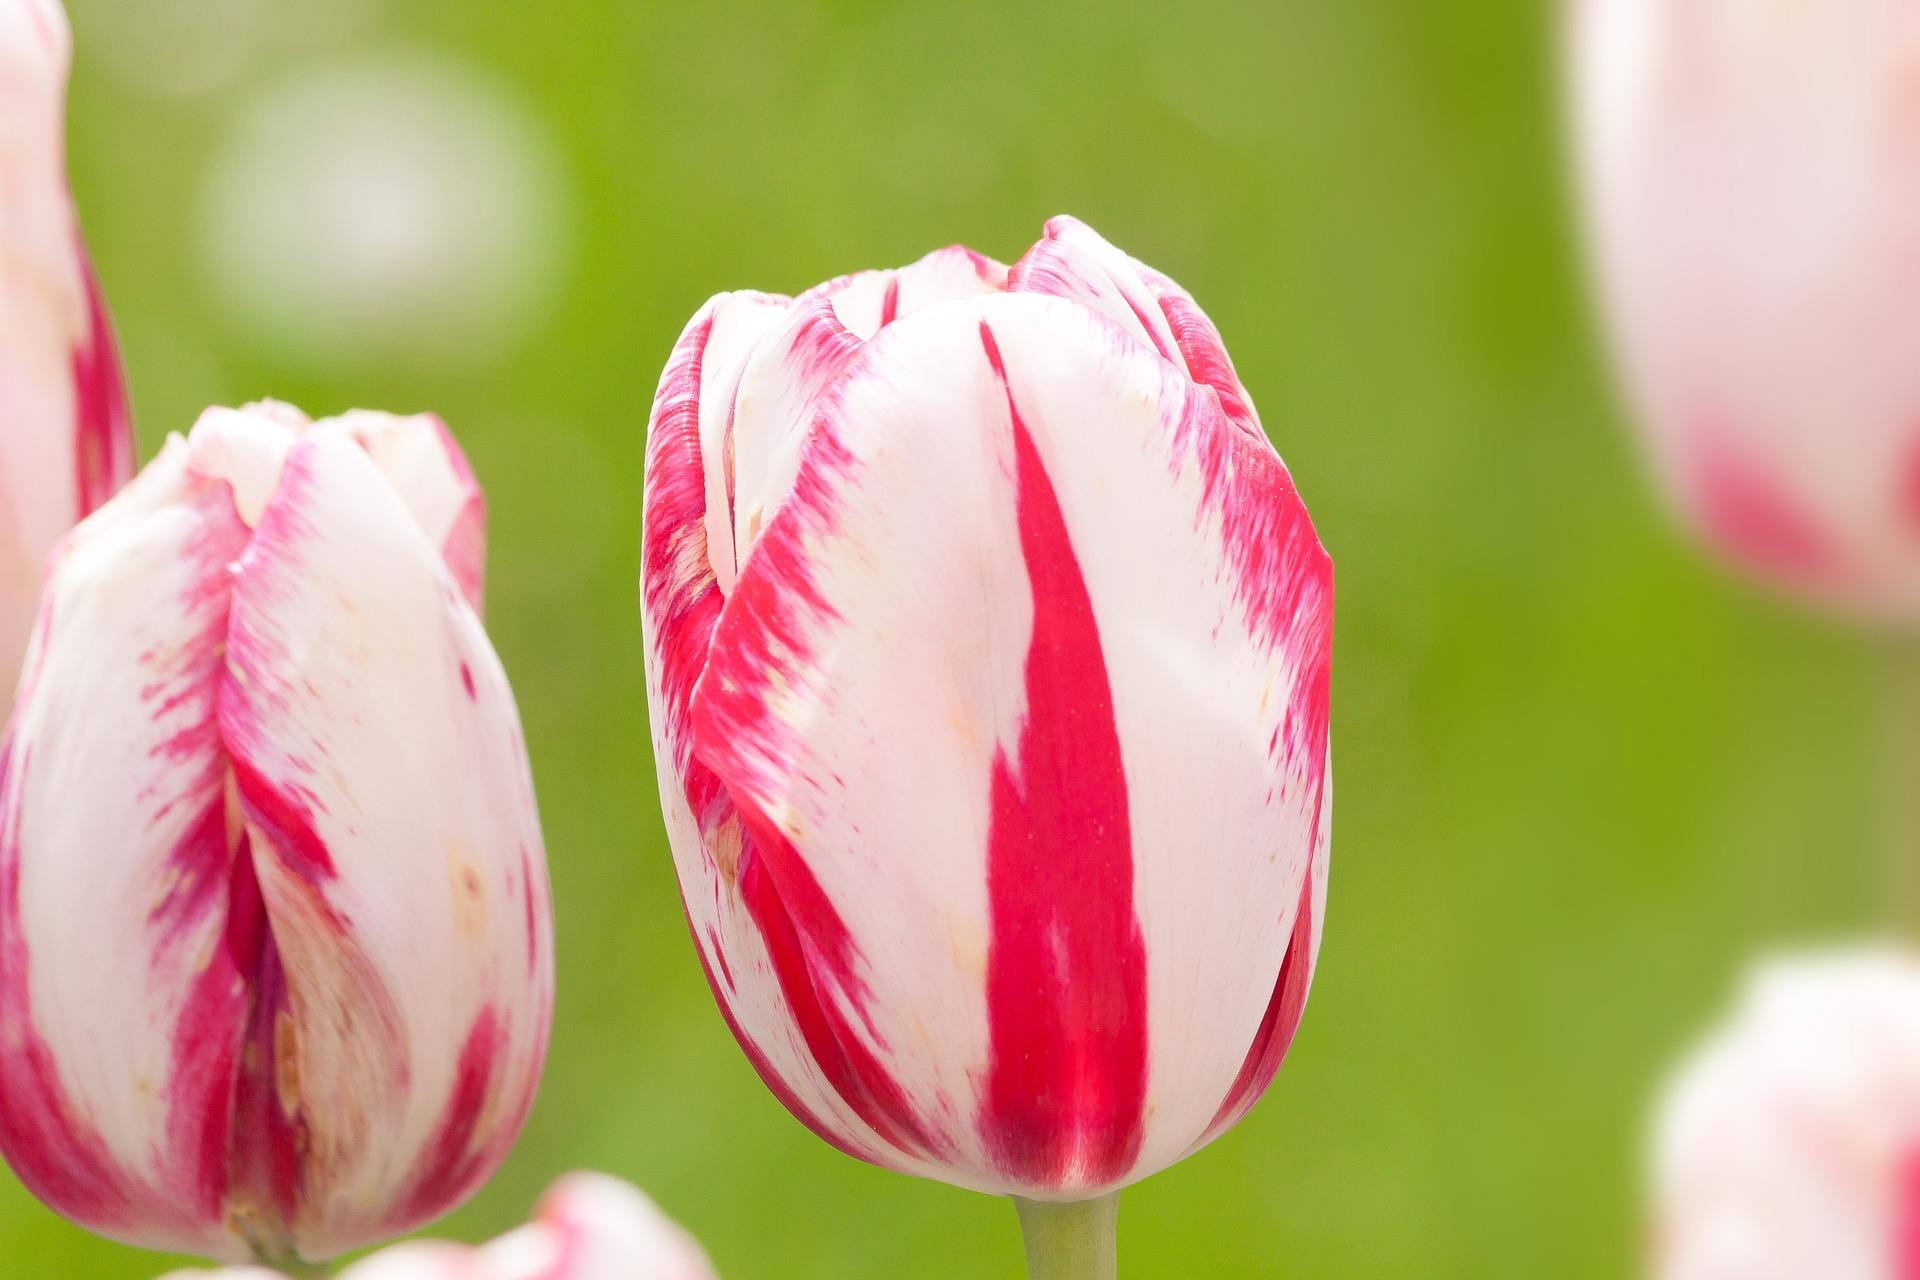 Tulip Single Late 'Sorbet' - Tulip from Leo Berbee Bulb Company